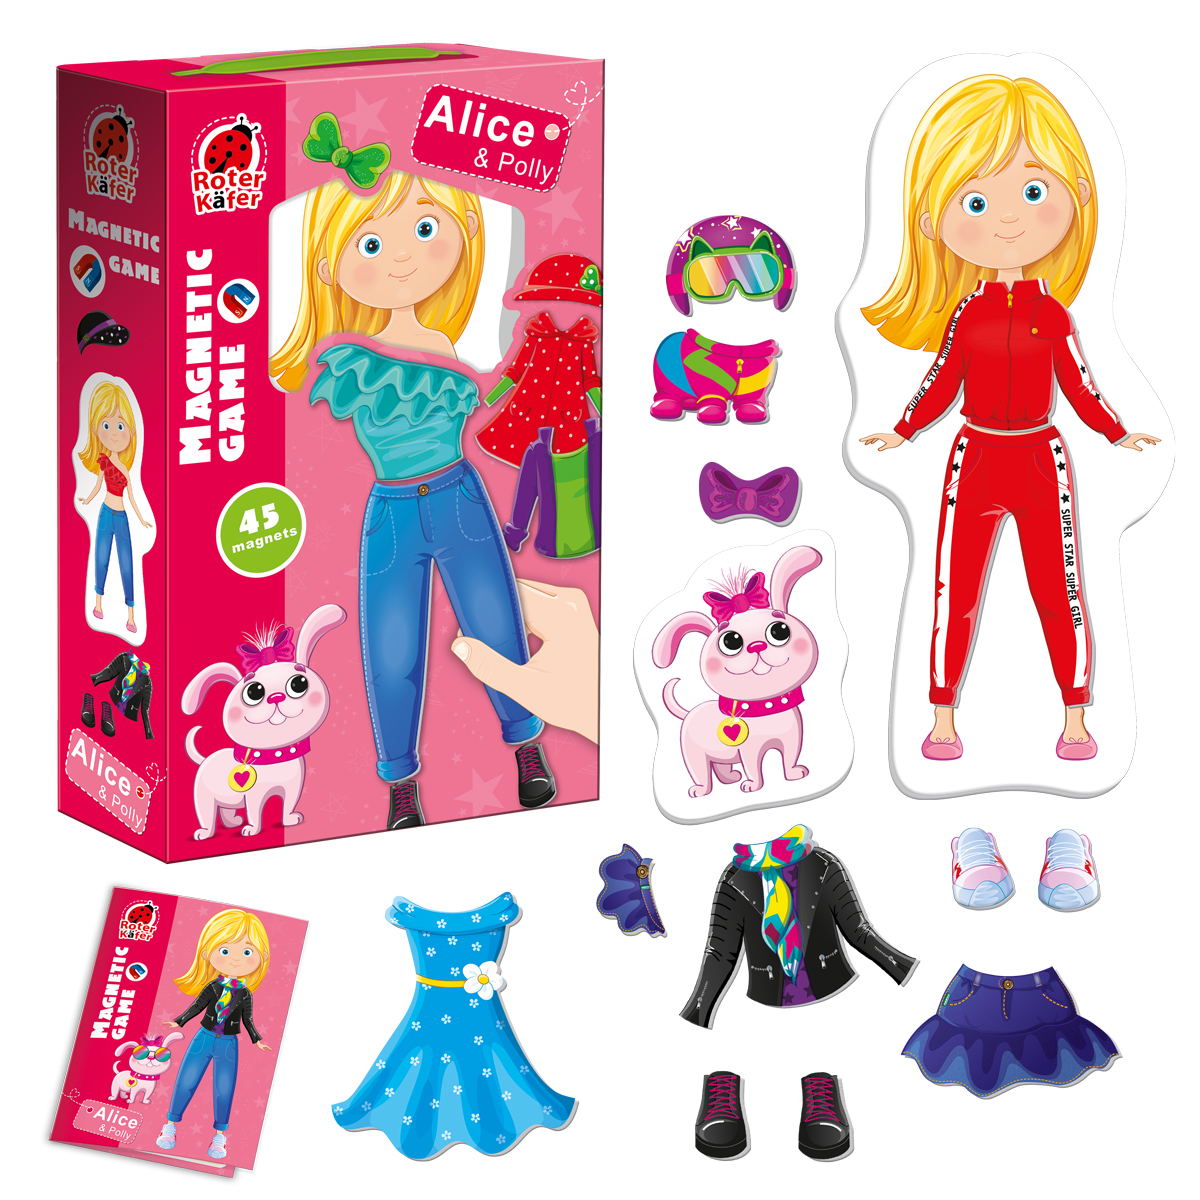 Магнитная игра Roter Kafer кукла-одевашка Alice and Polly - фото 1